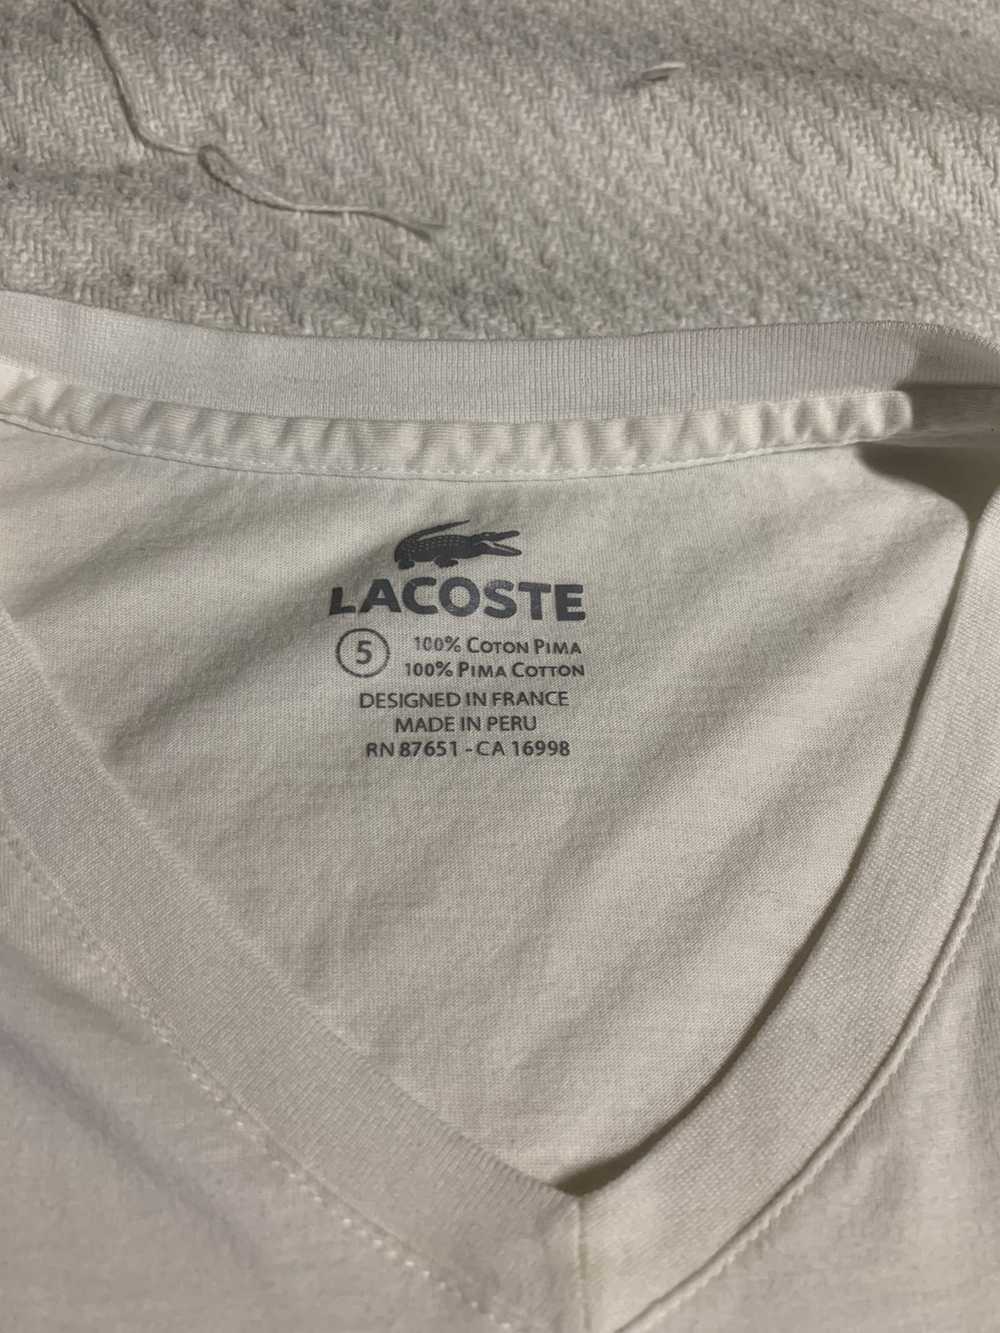 Lacoste Lacoste White V Neck - M - image 2